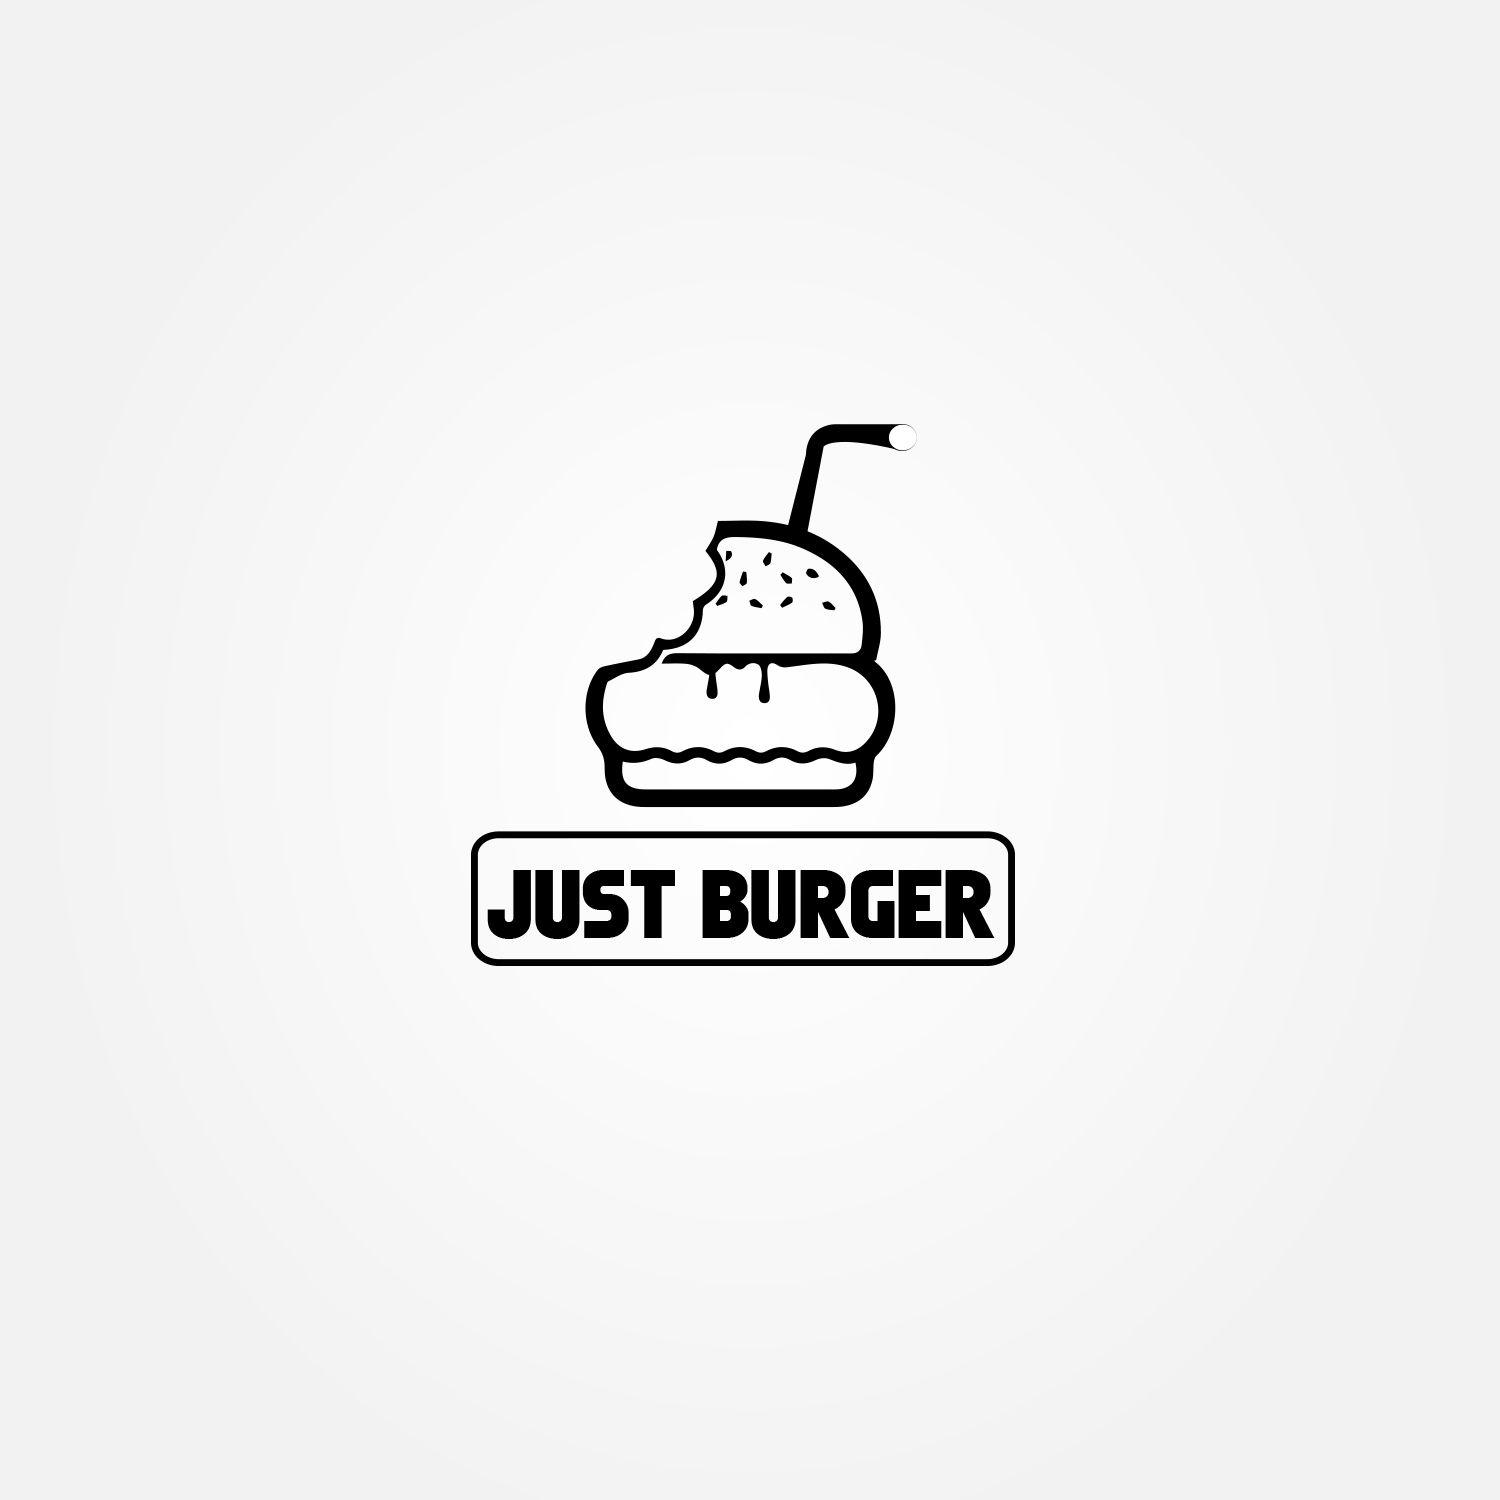 Frying Food Stor Logo - Bold, Traditional, Food Store Logo Design for Just Burger